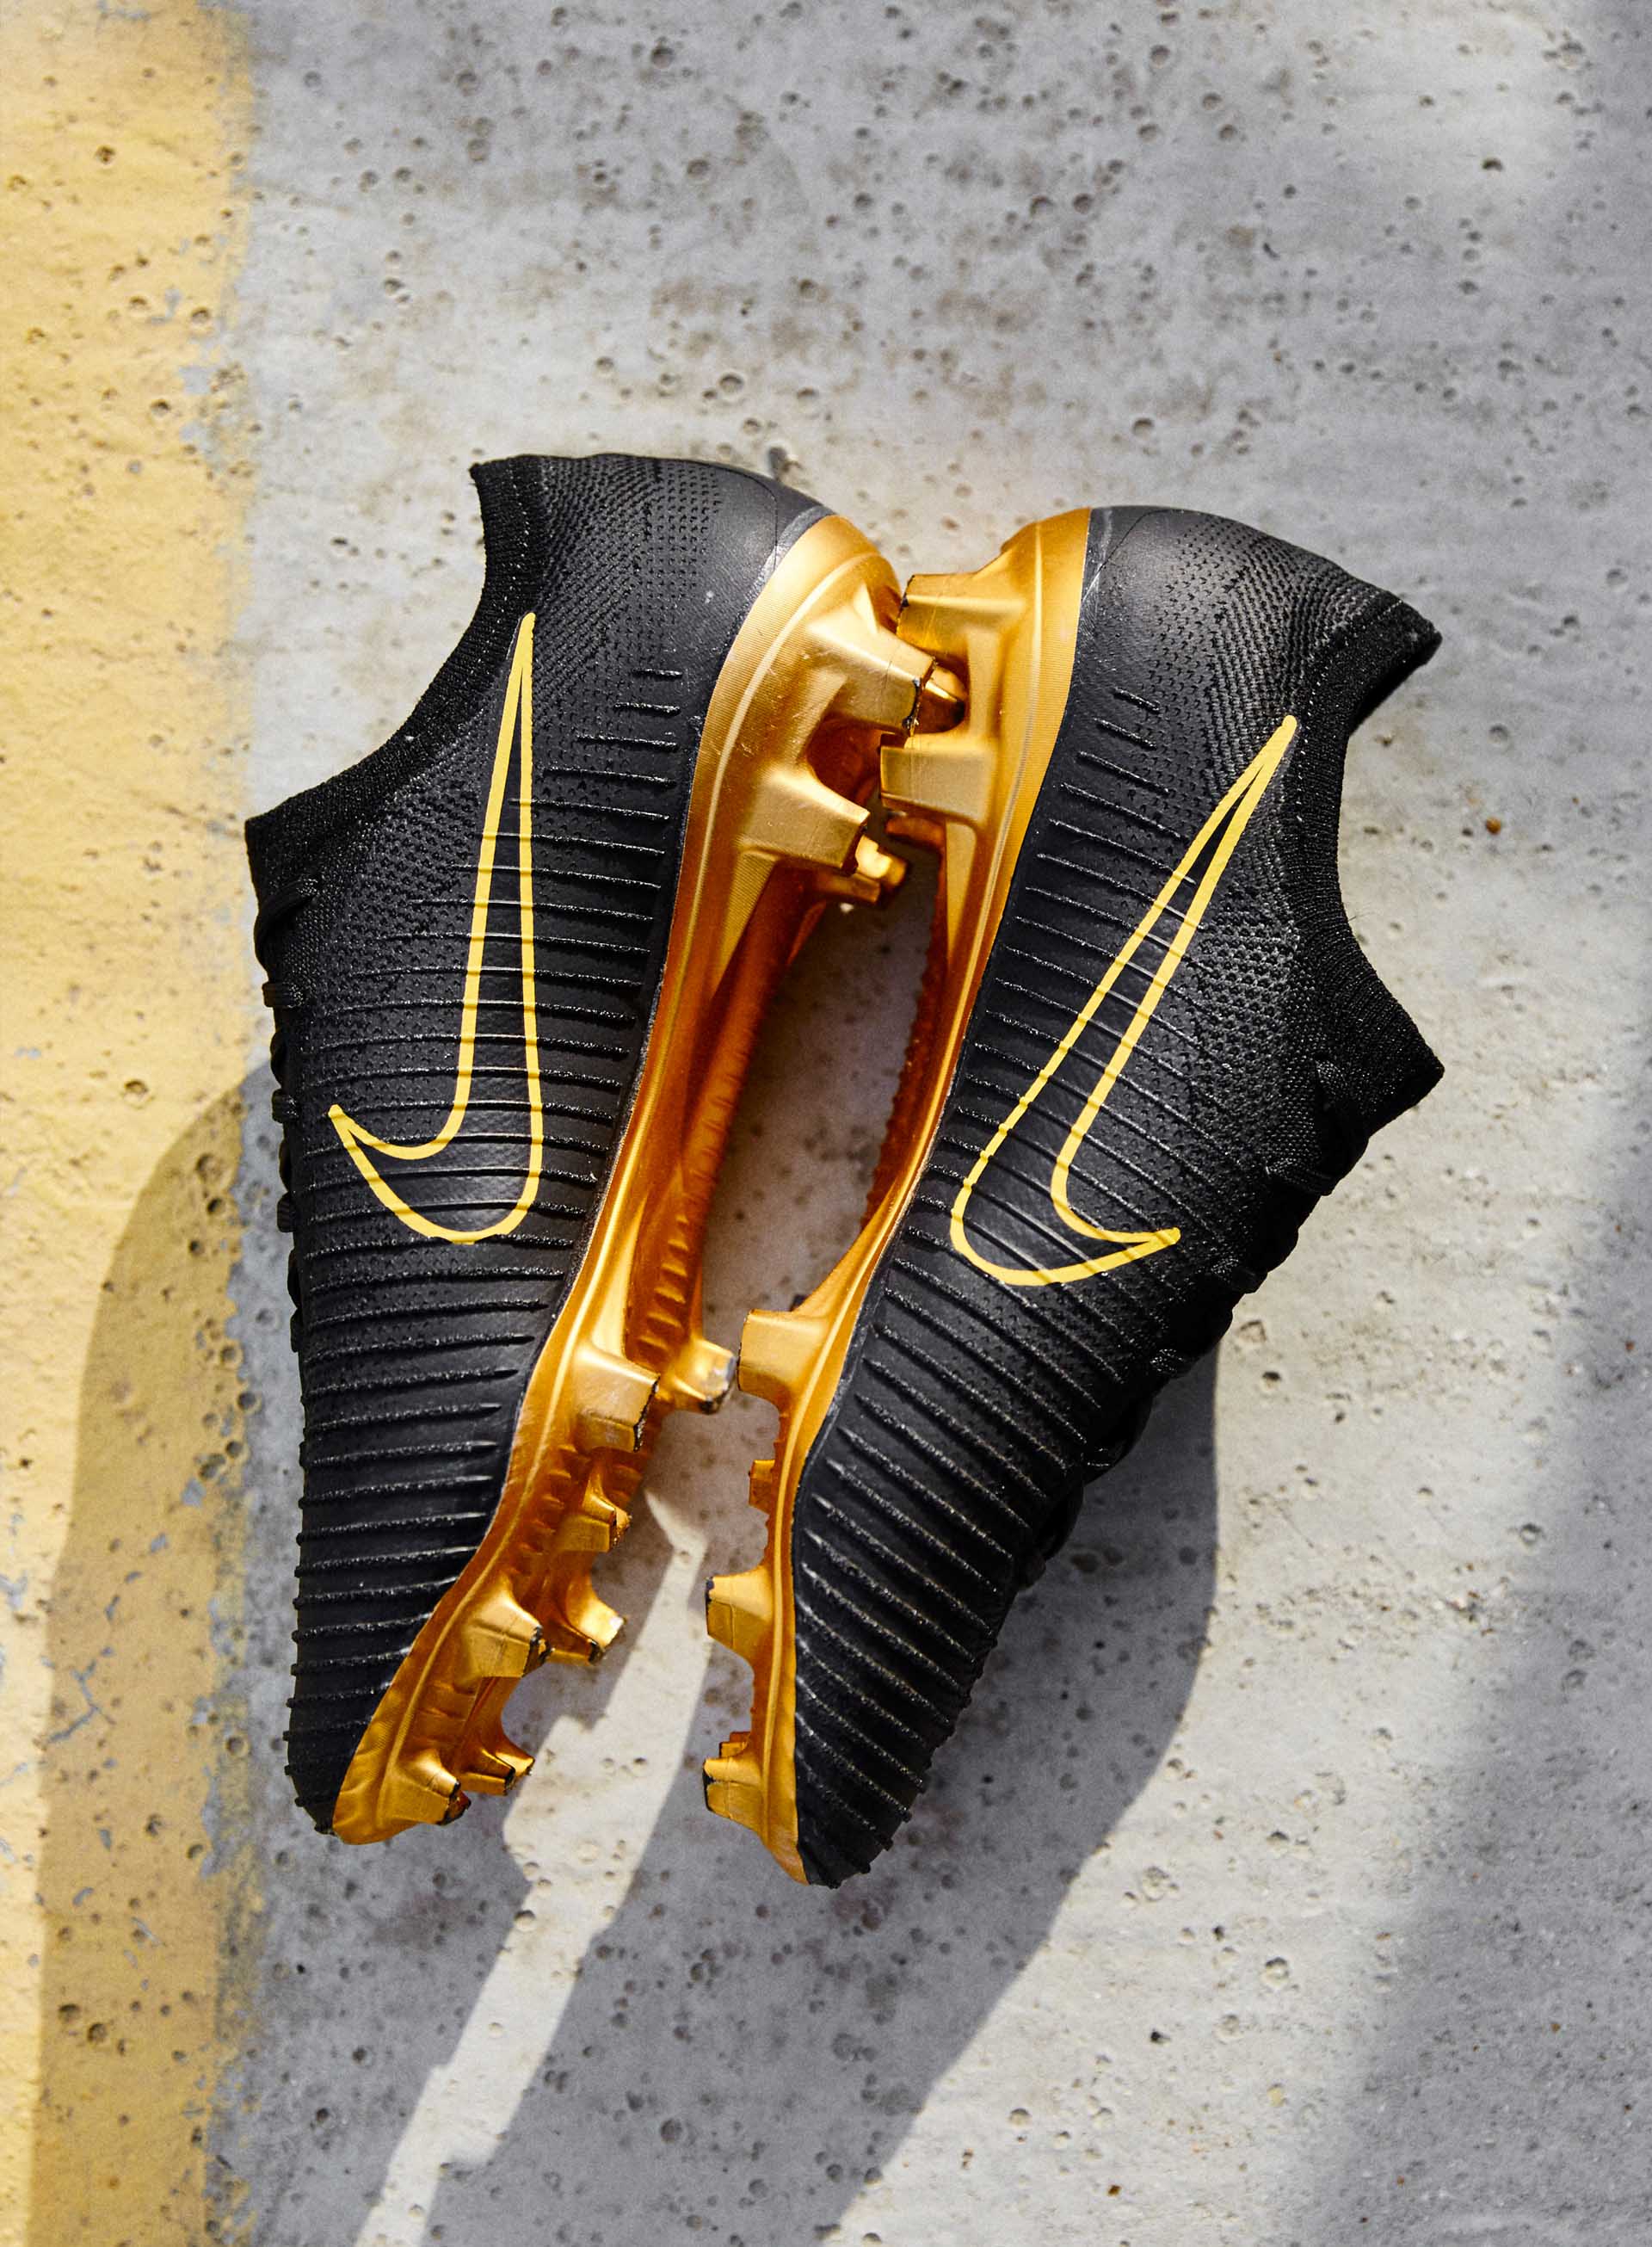 Jual Sepatu Bola Nike Mercurial Vapor XI Original Quality